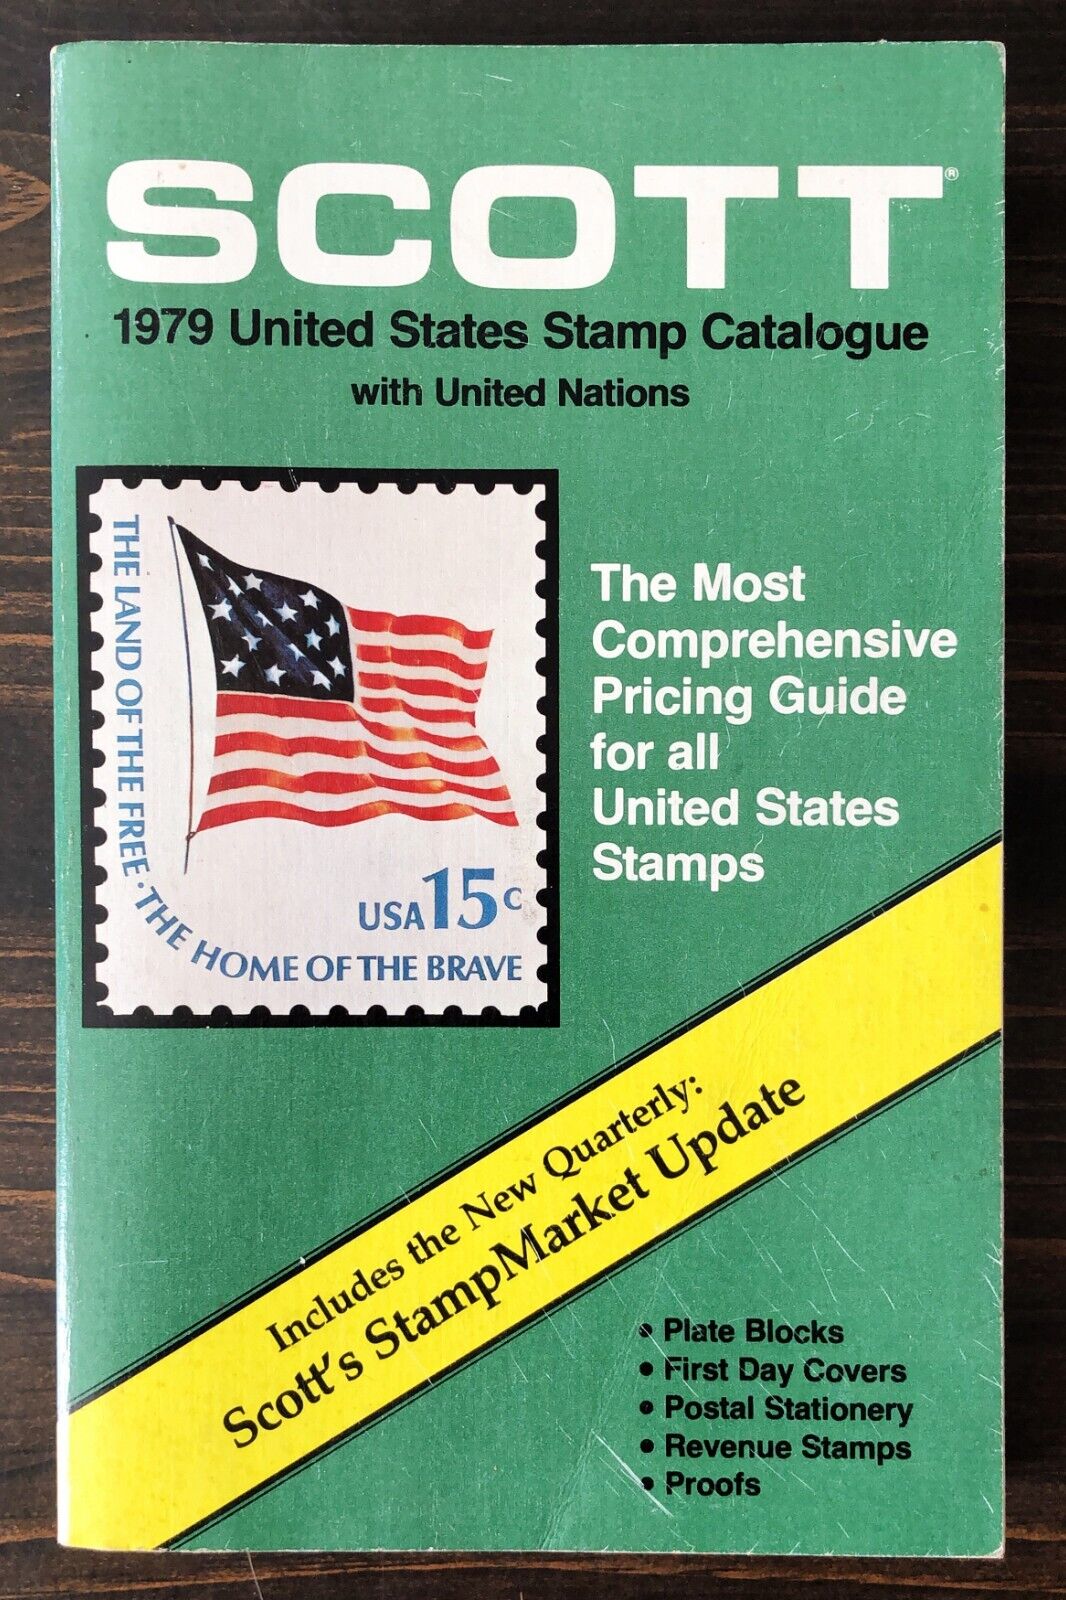 Scott 1979 United States Stamp Catalogue